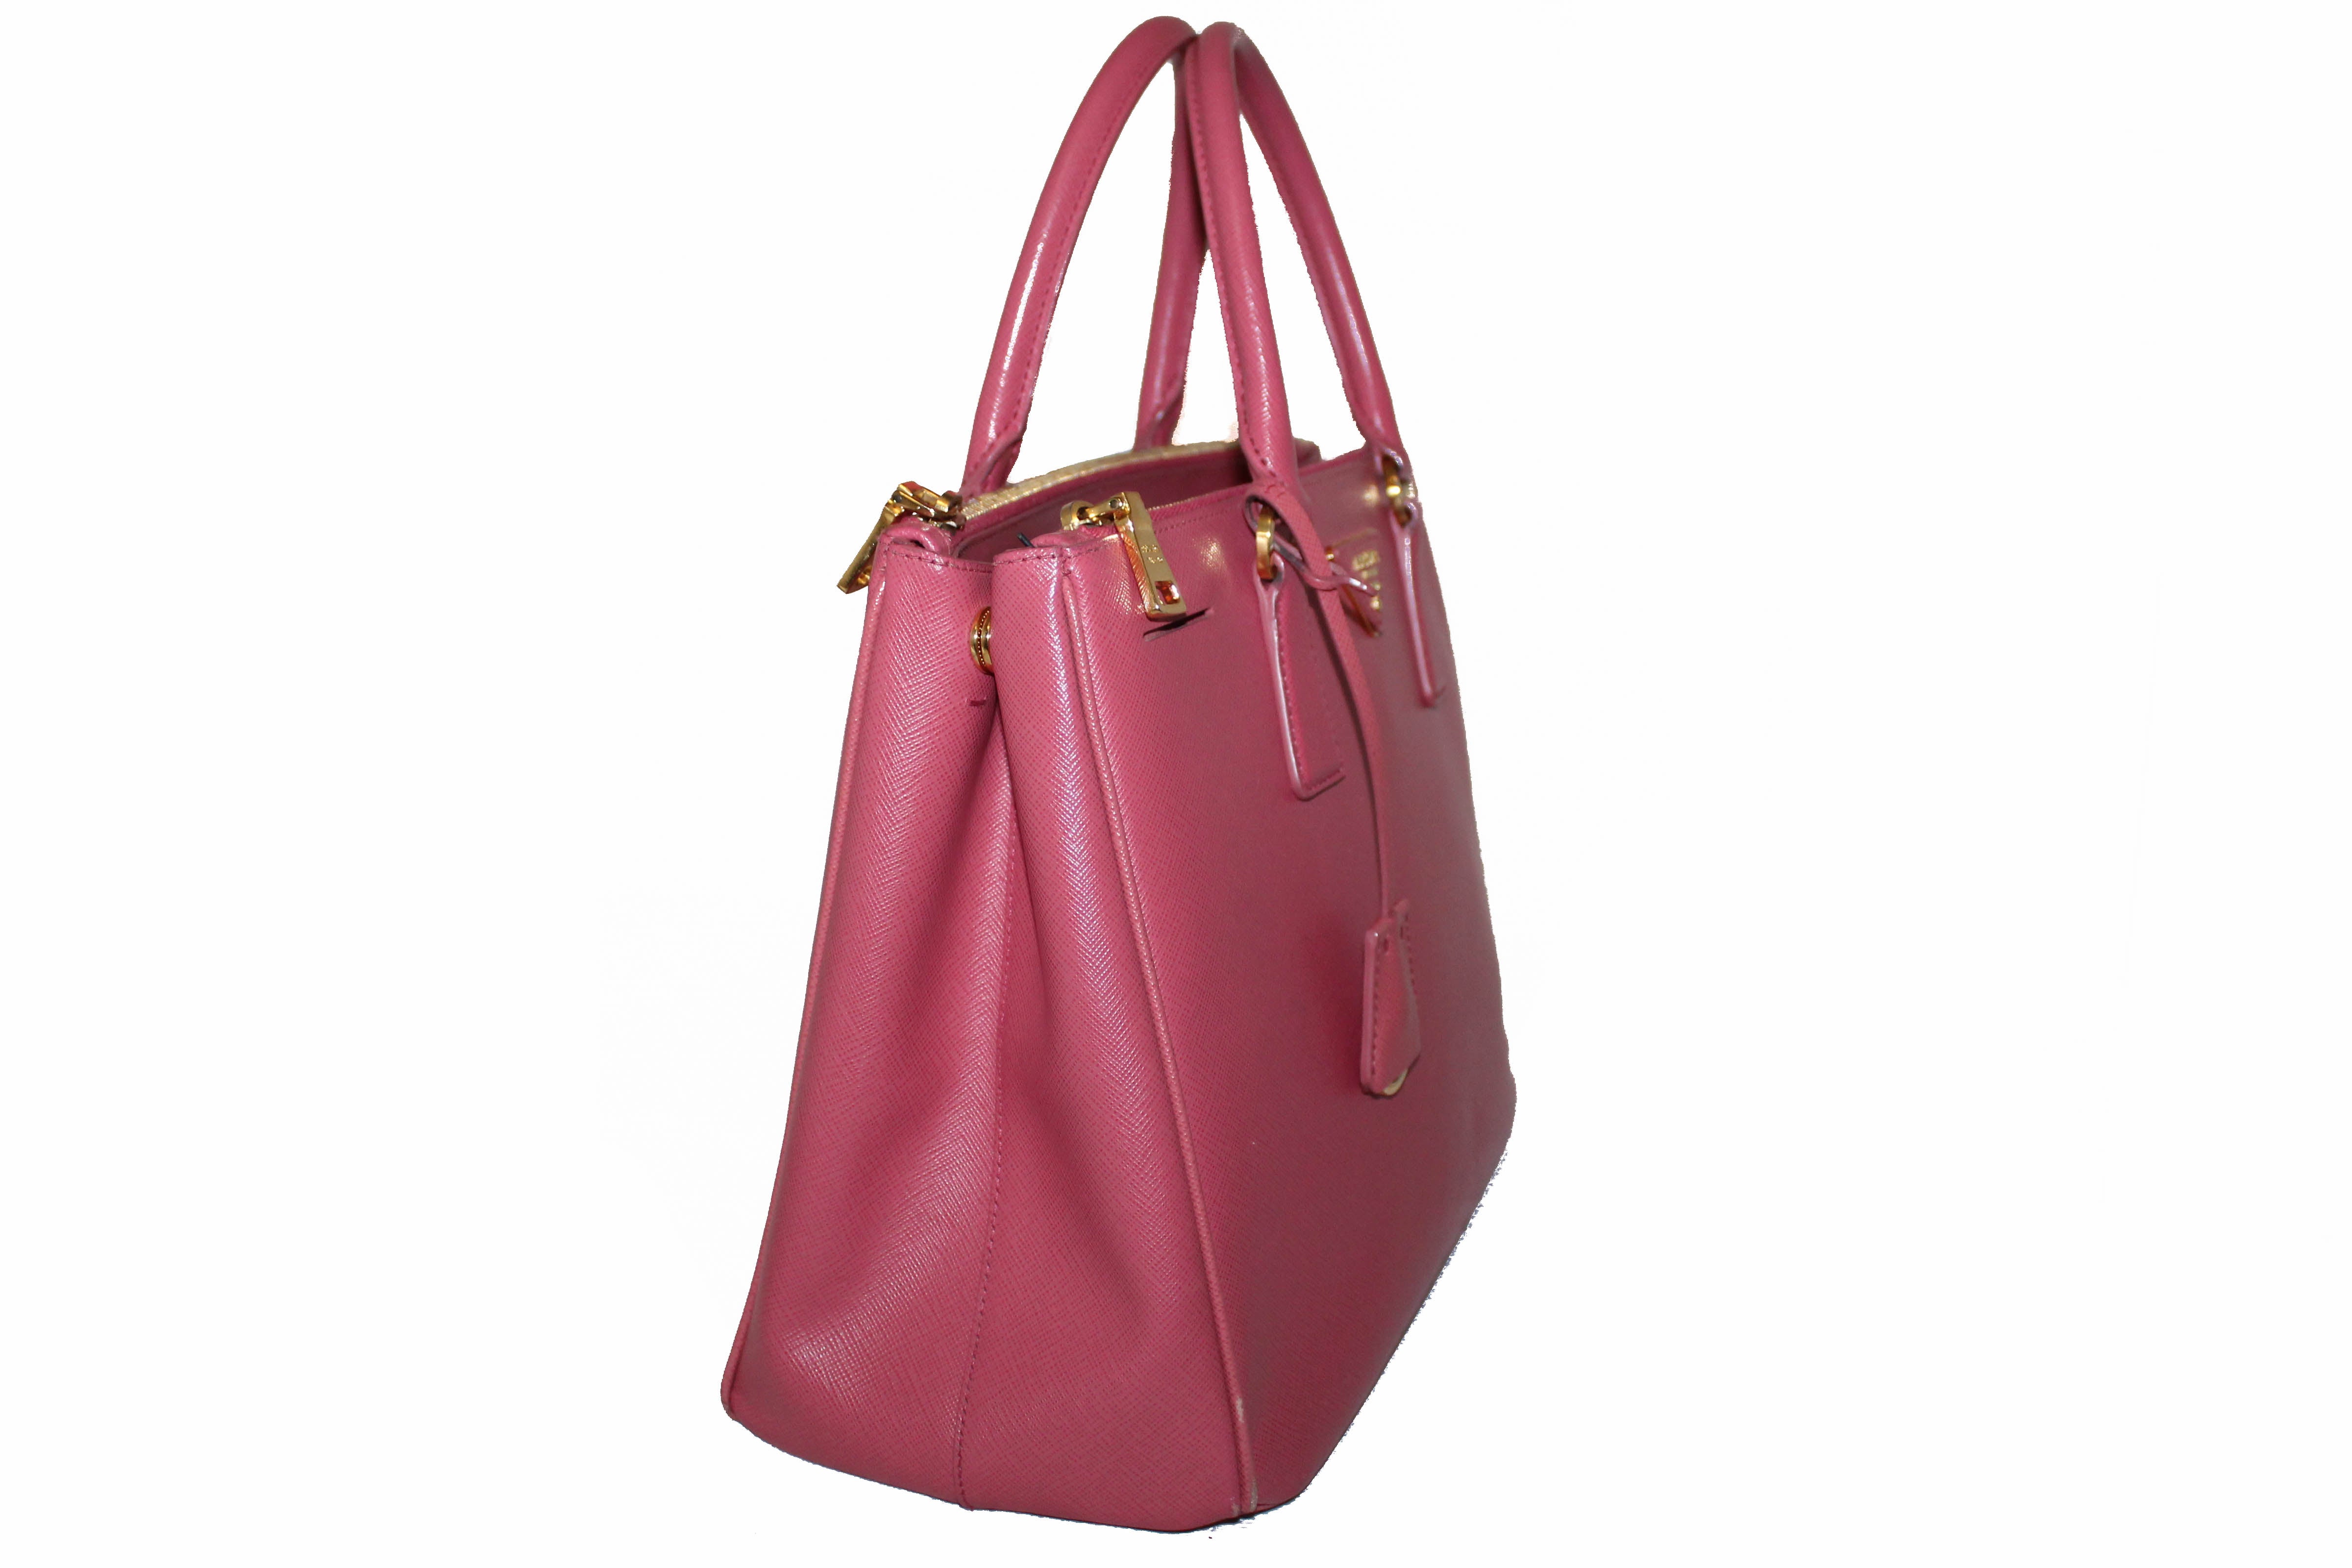 Prada Pink Saffiano Lux Leather Medium Front Pocket Double Zip